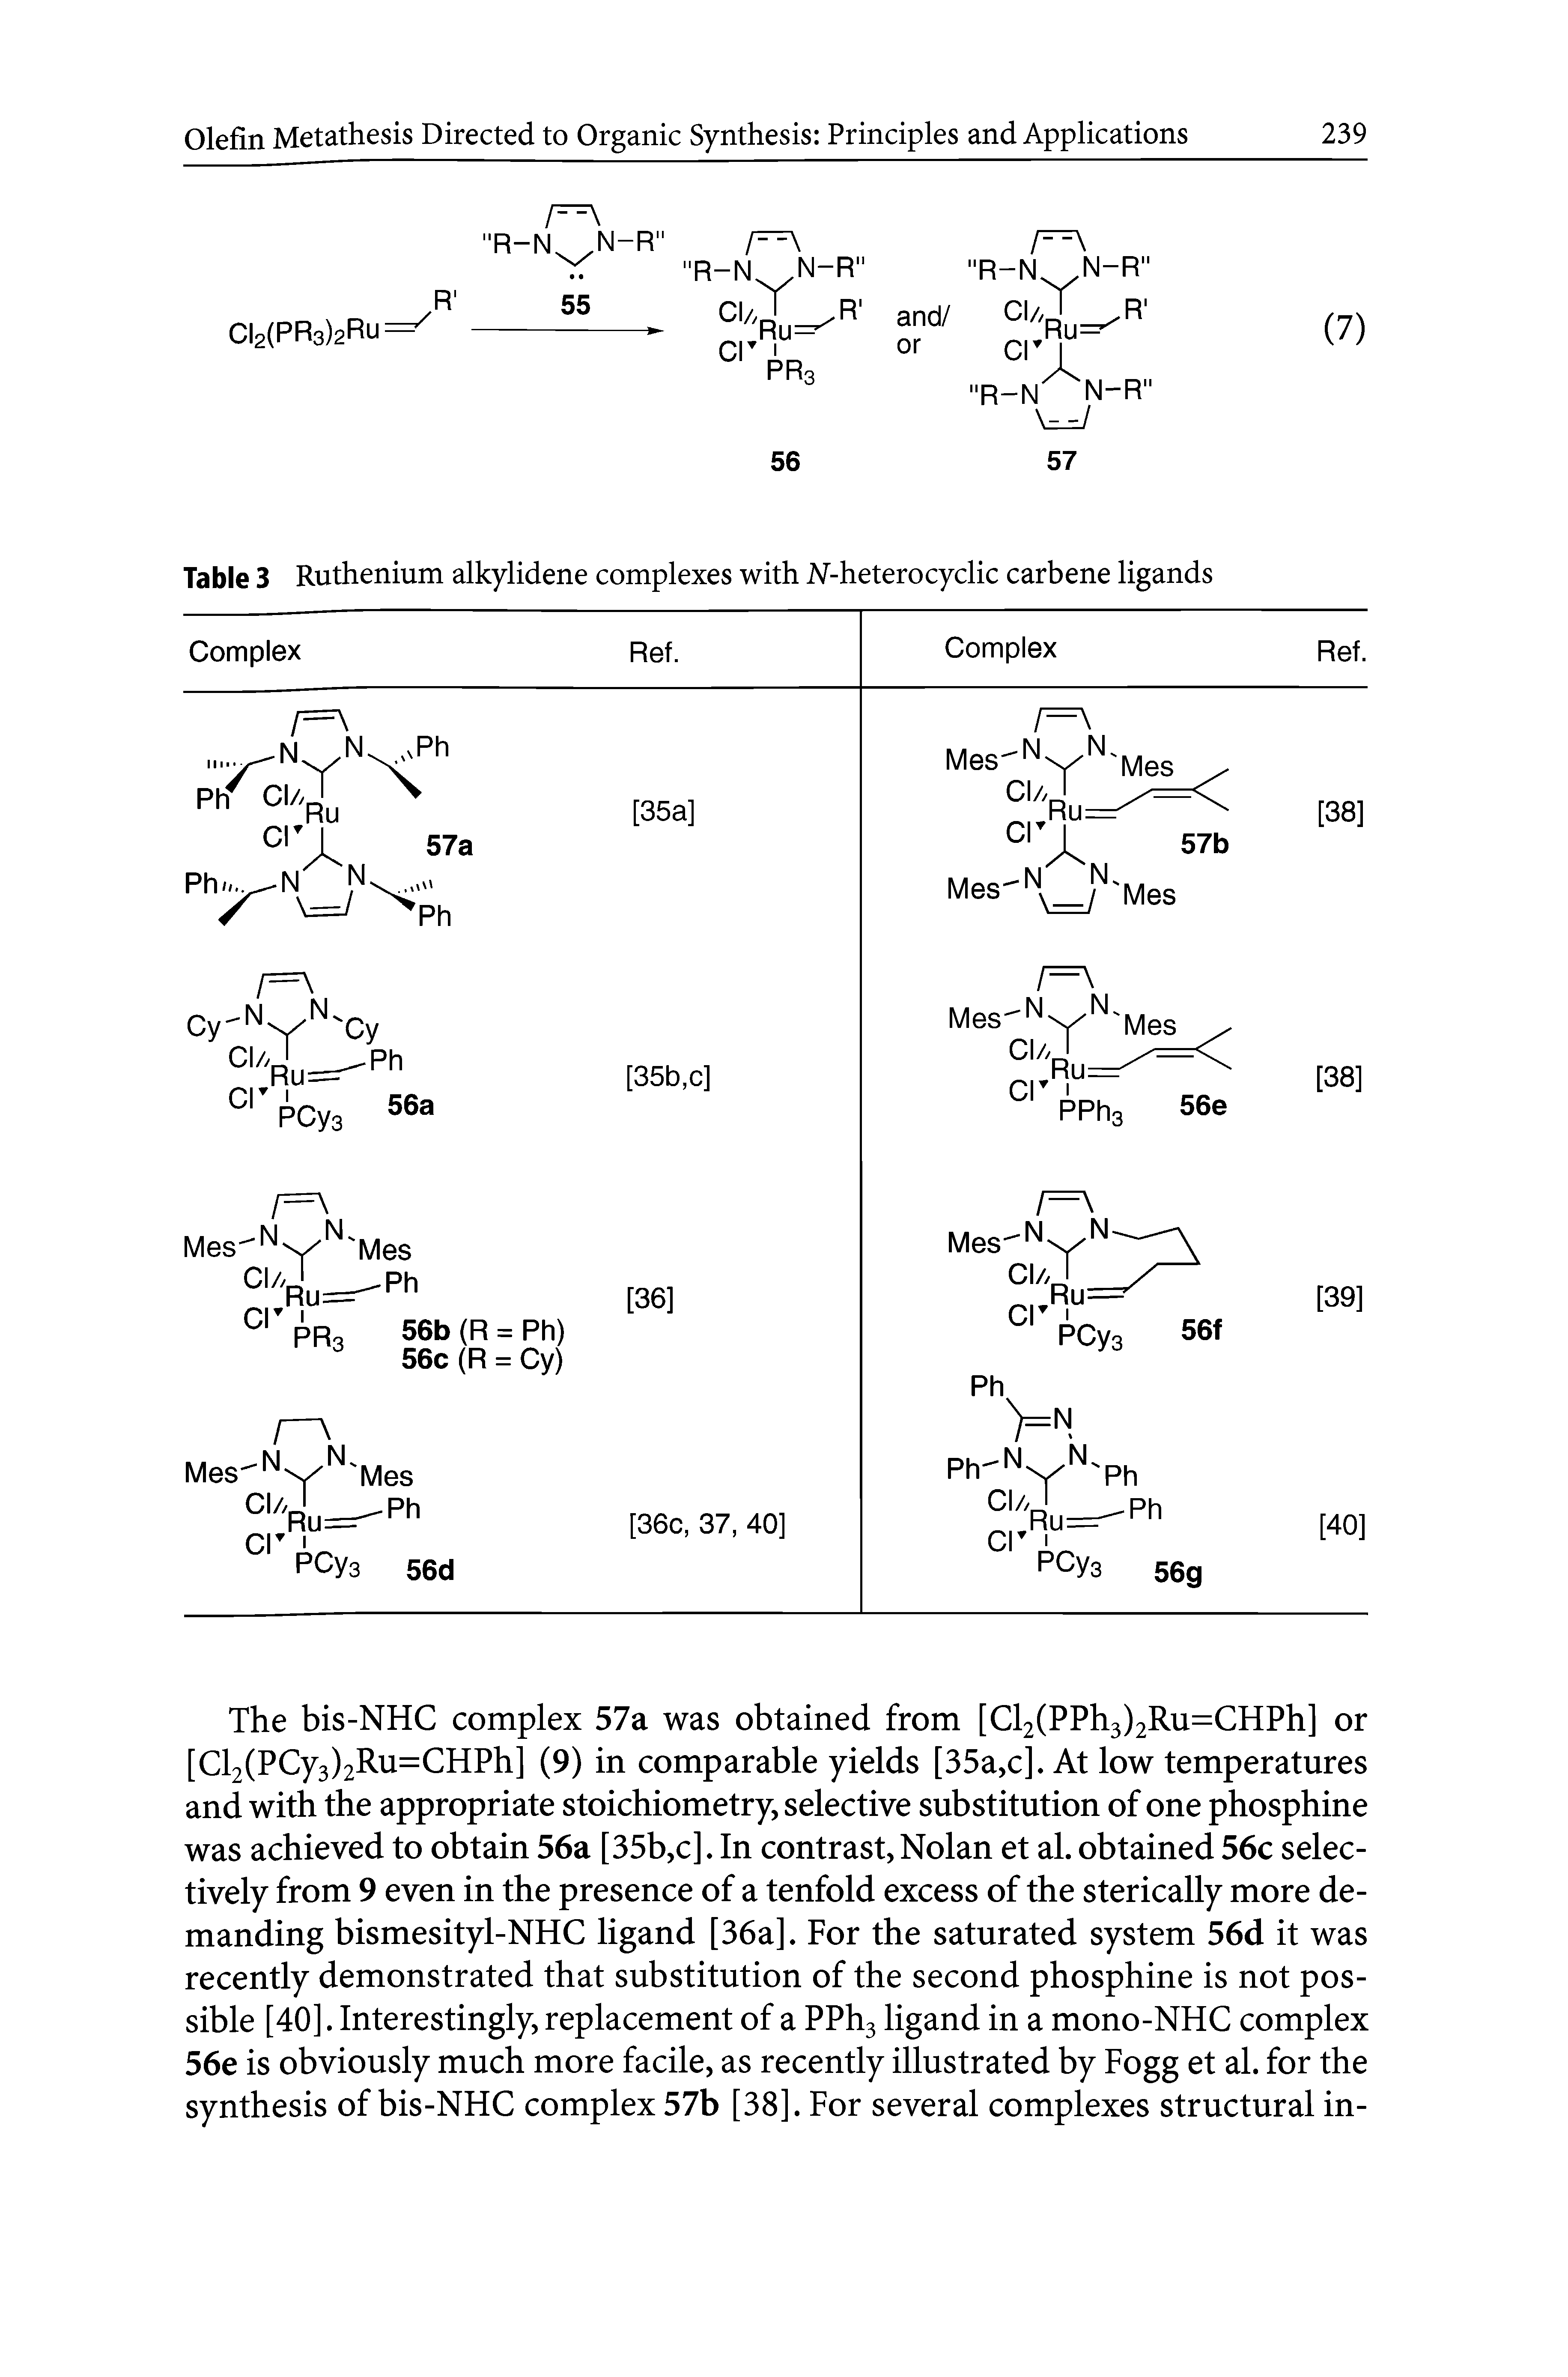 Table 3 Ruthenium alkylidene complexes with JV-heterocyclic carbene ligands...